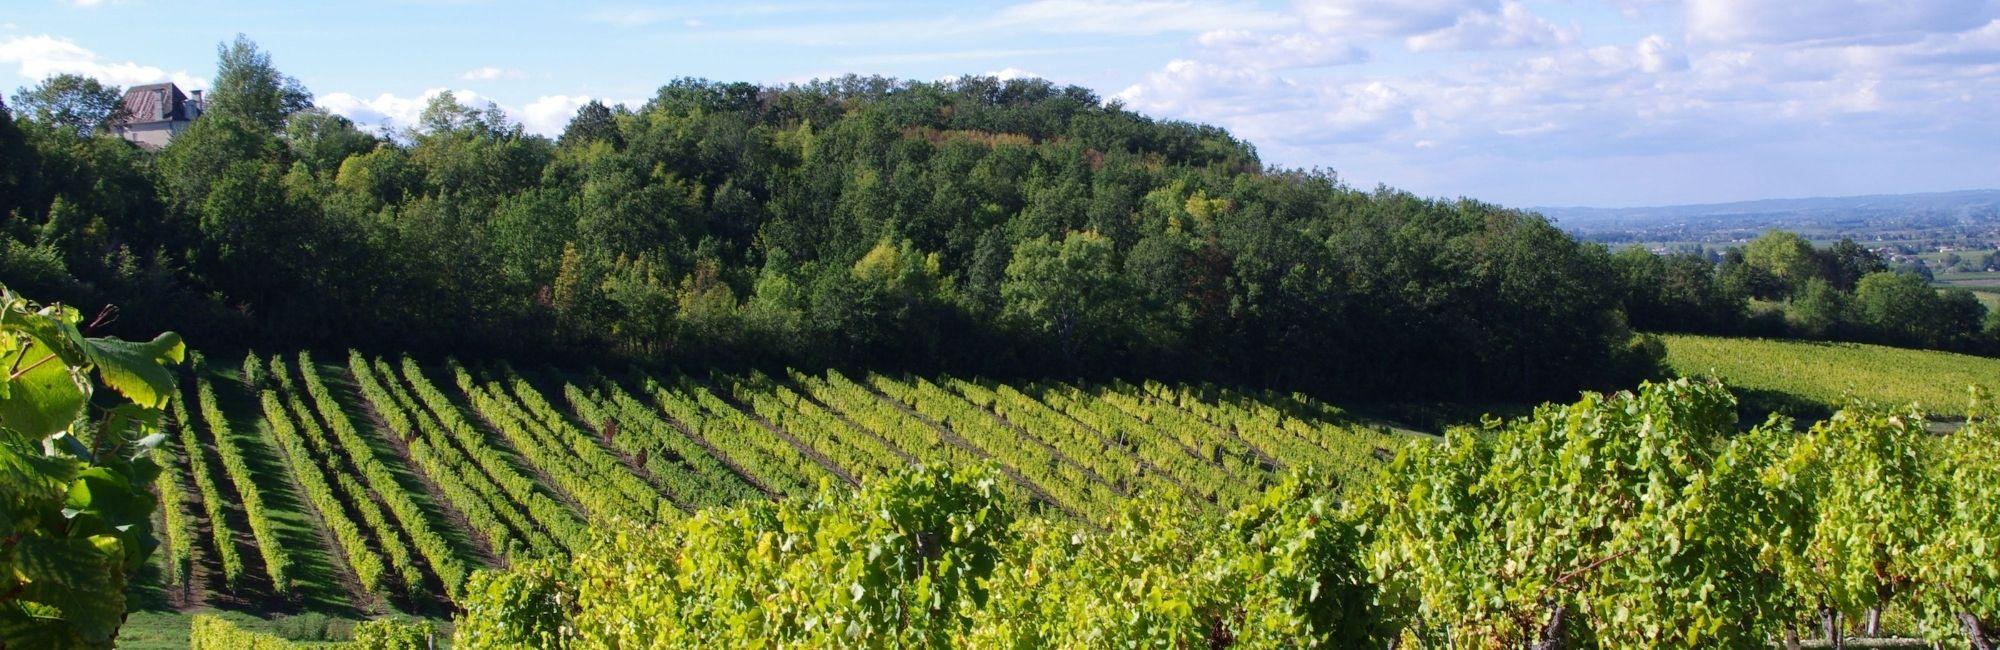 Vineyards in France 